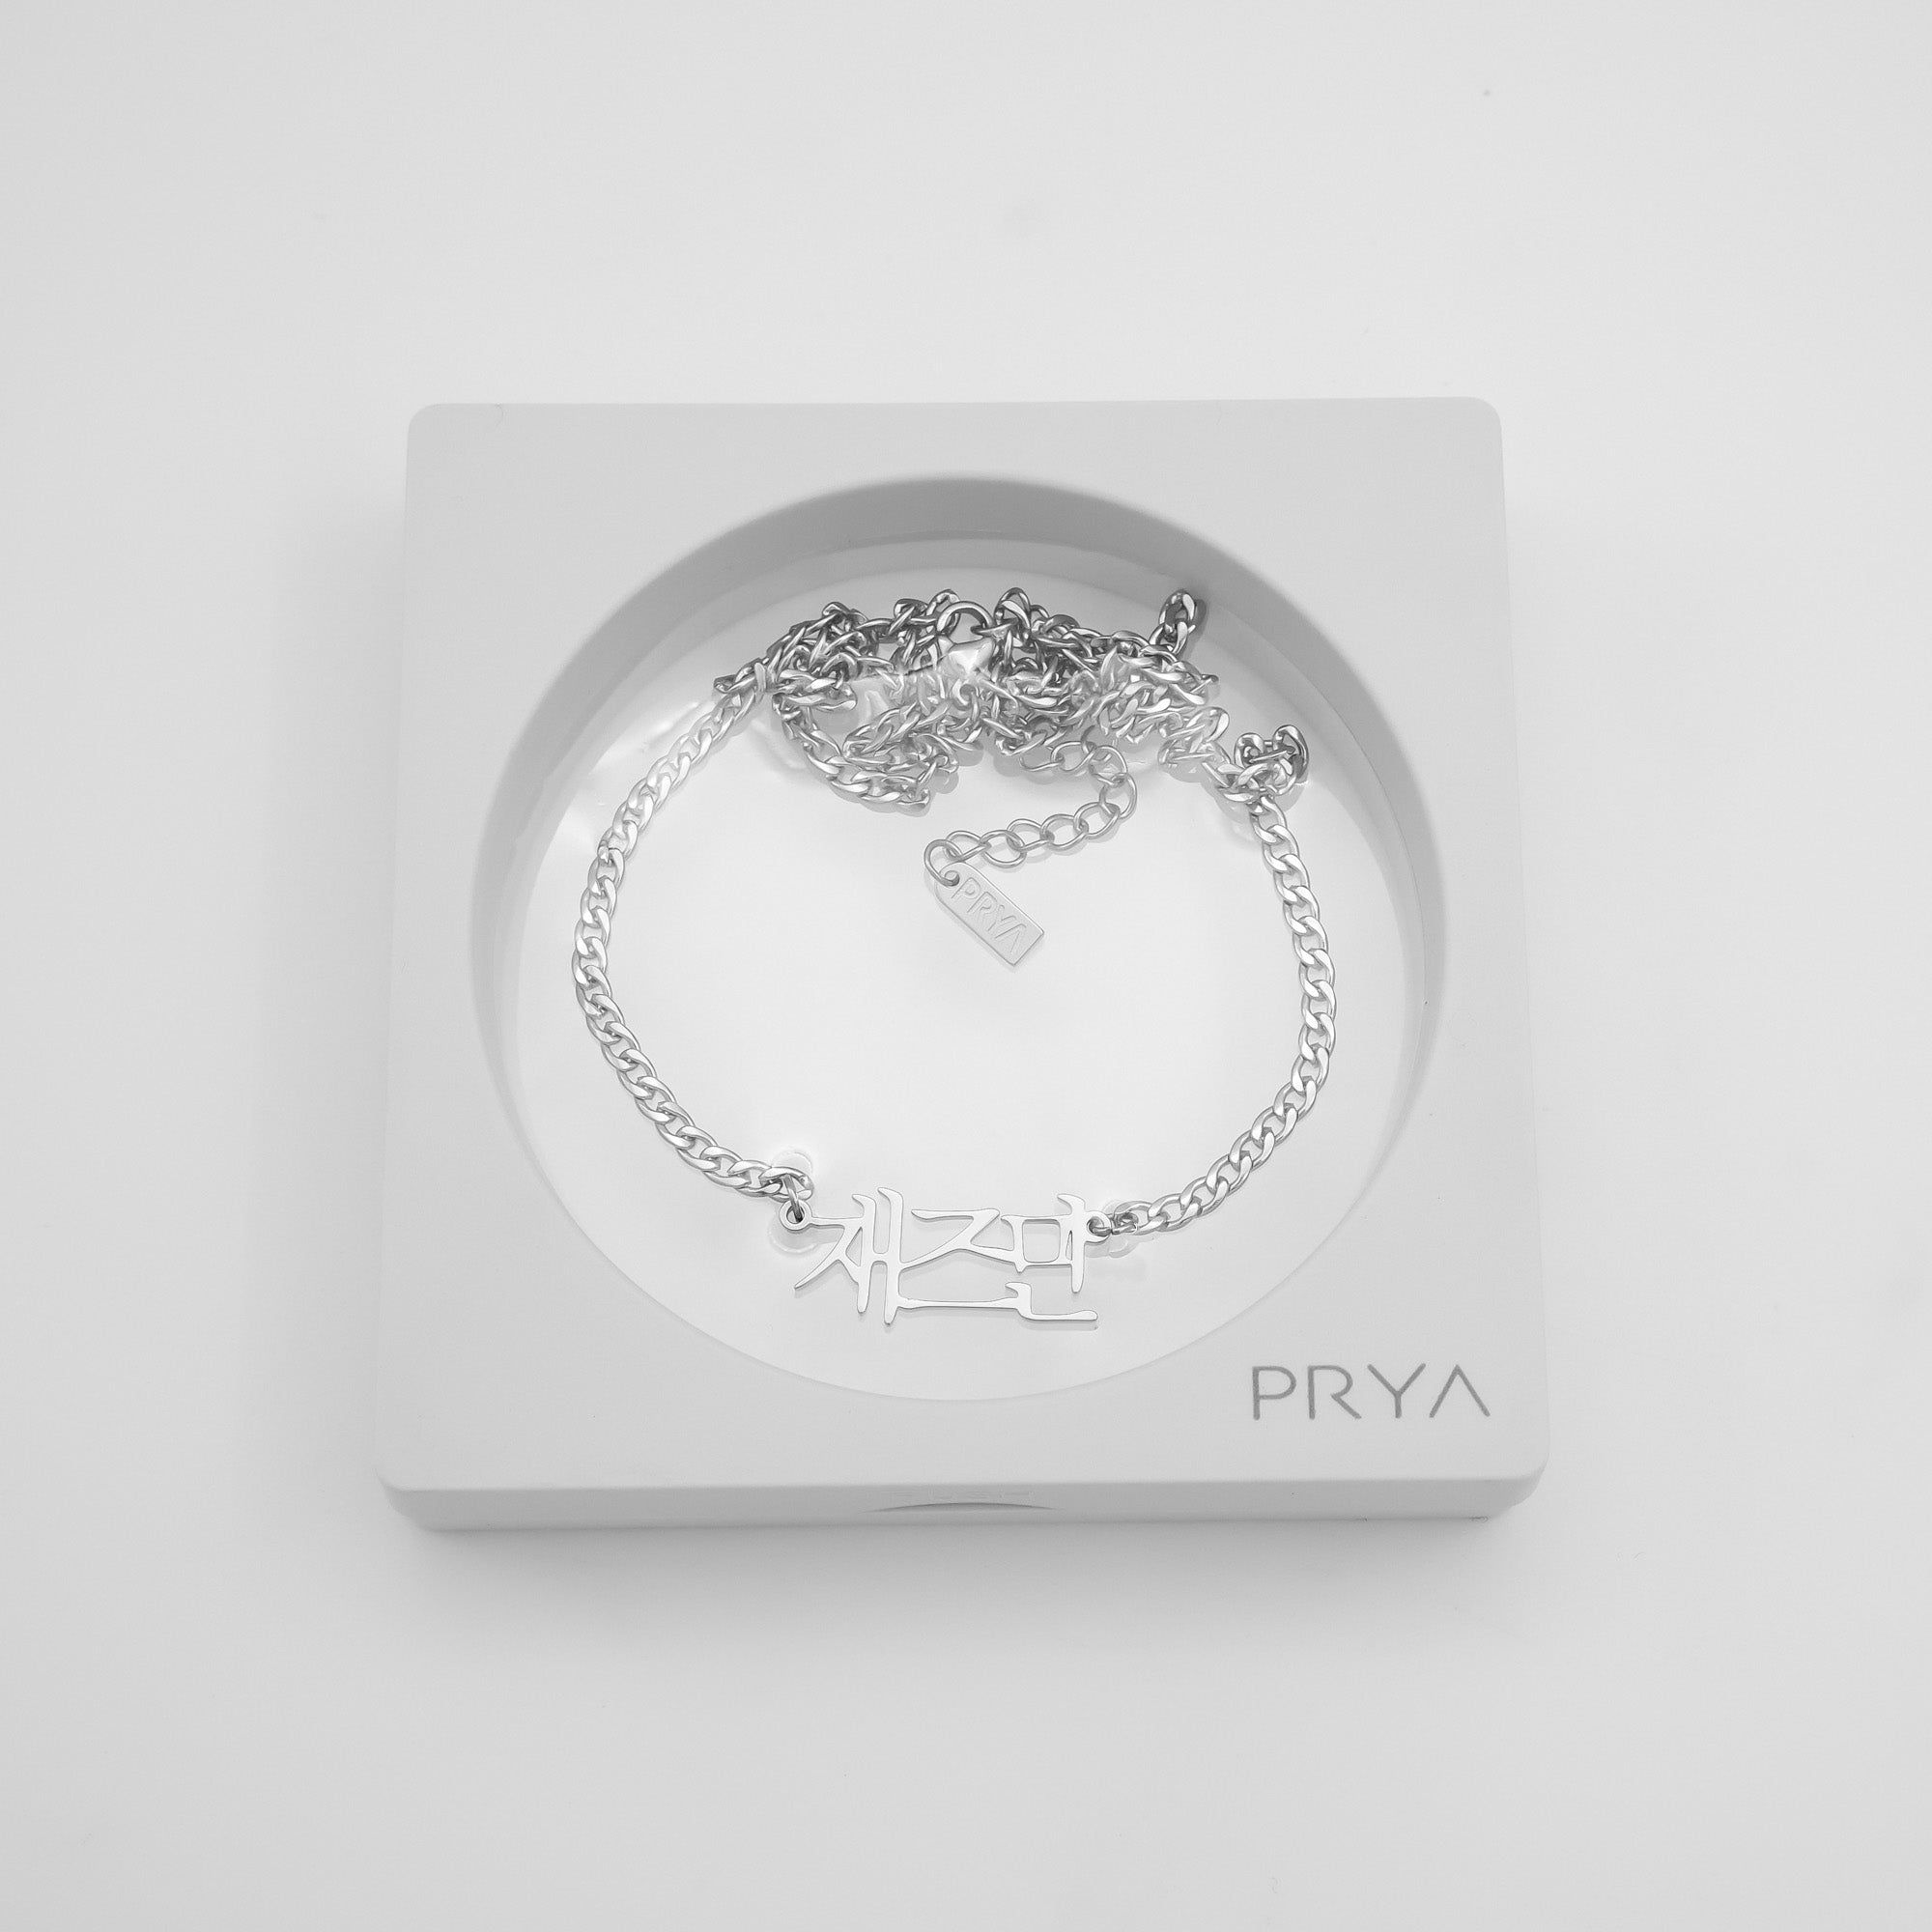 Silver Korean name necklace in display box